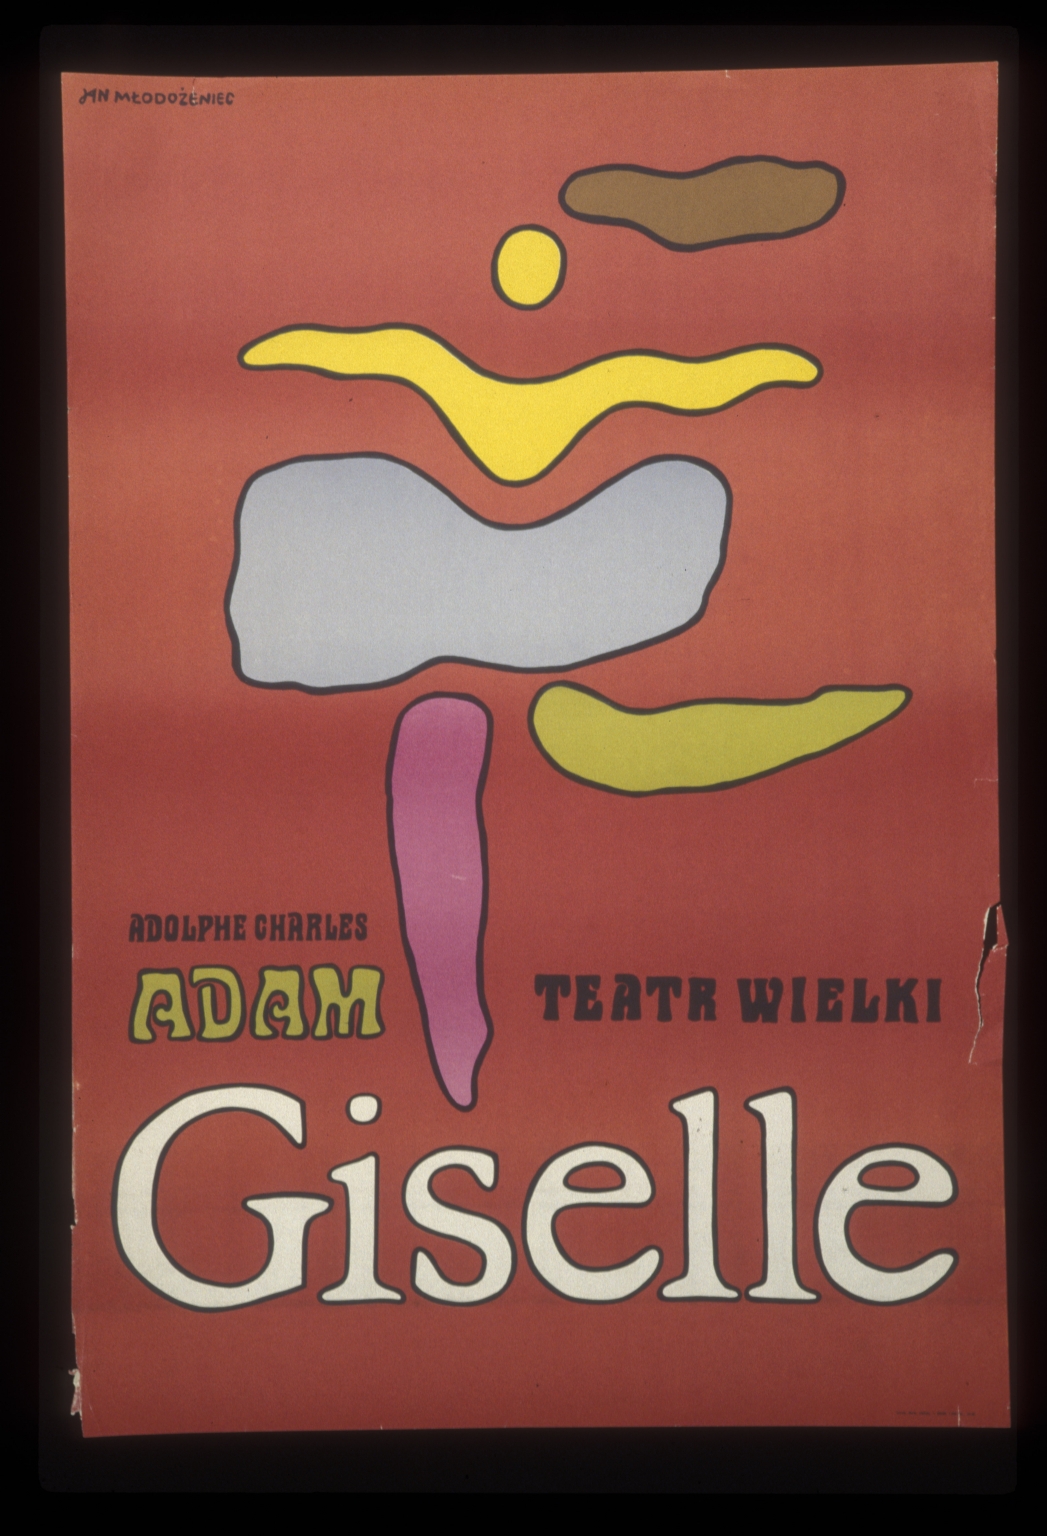 Giselle, Adolphe Charles Adam: Teatr Wielki